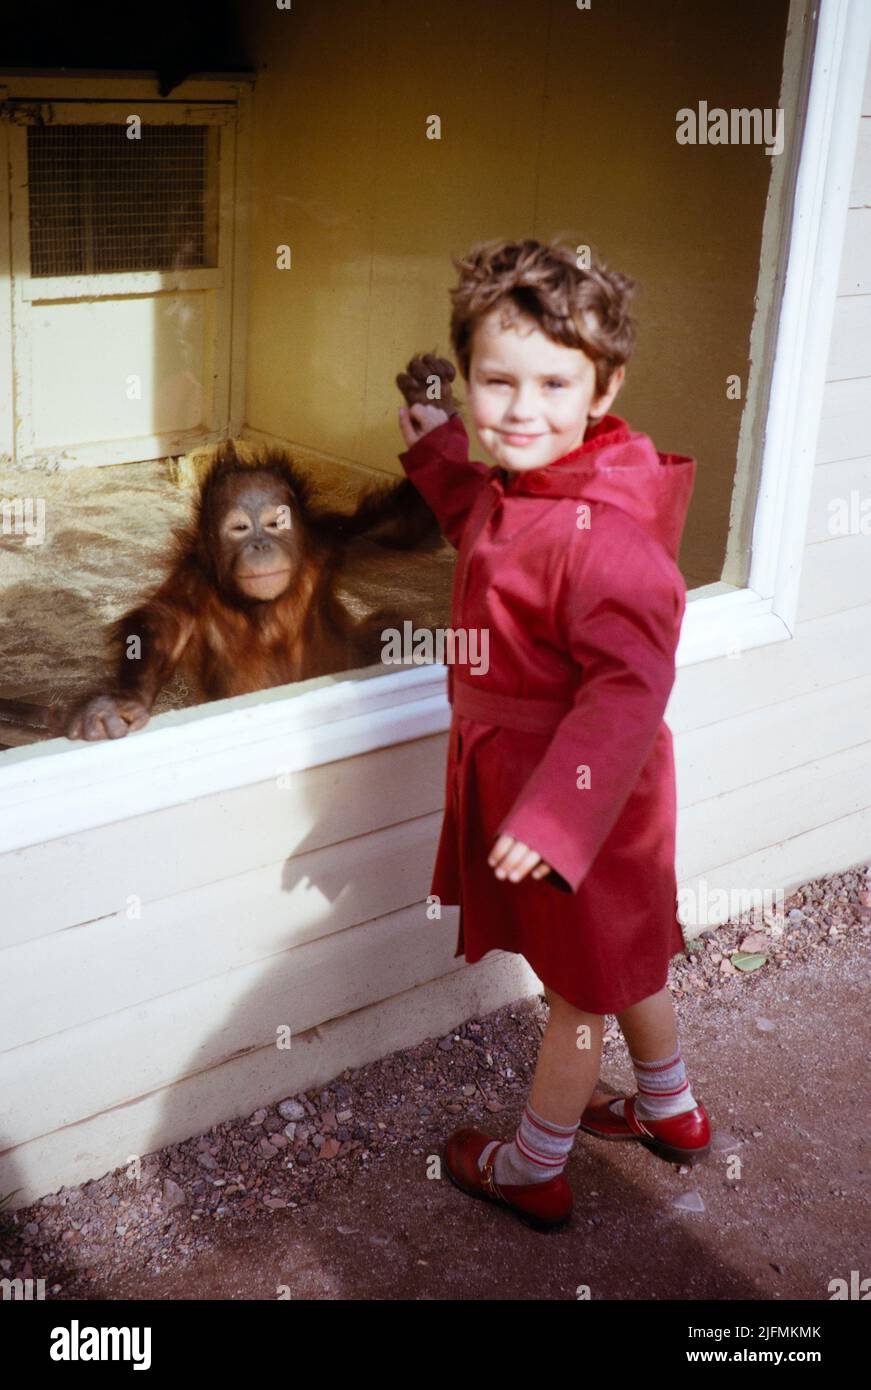 Child standing by young Orang Utan or Orangutan, Twycross Zoo, Little Orton, Leicestershire, England, UK early 1960s Stock Photo